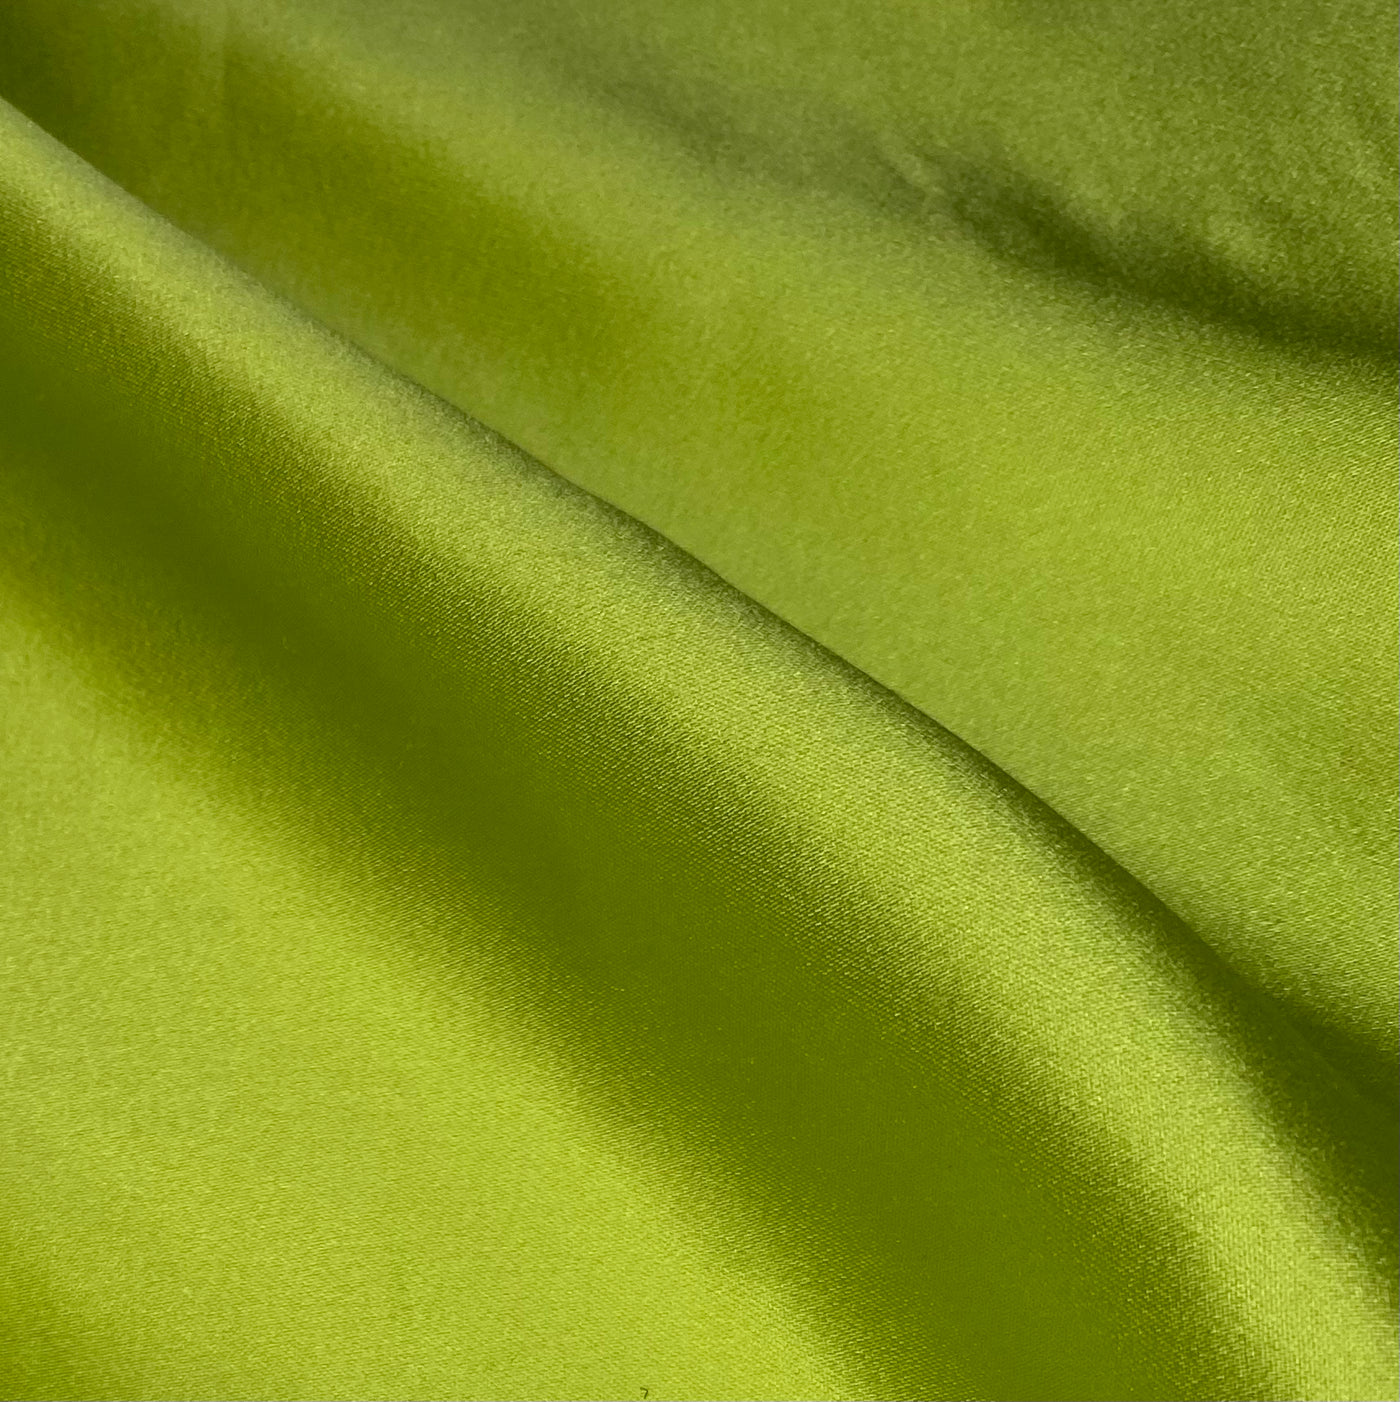 Beryl Green Charmeuse Fabric 100% Pure Silk for Fashion 